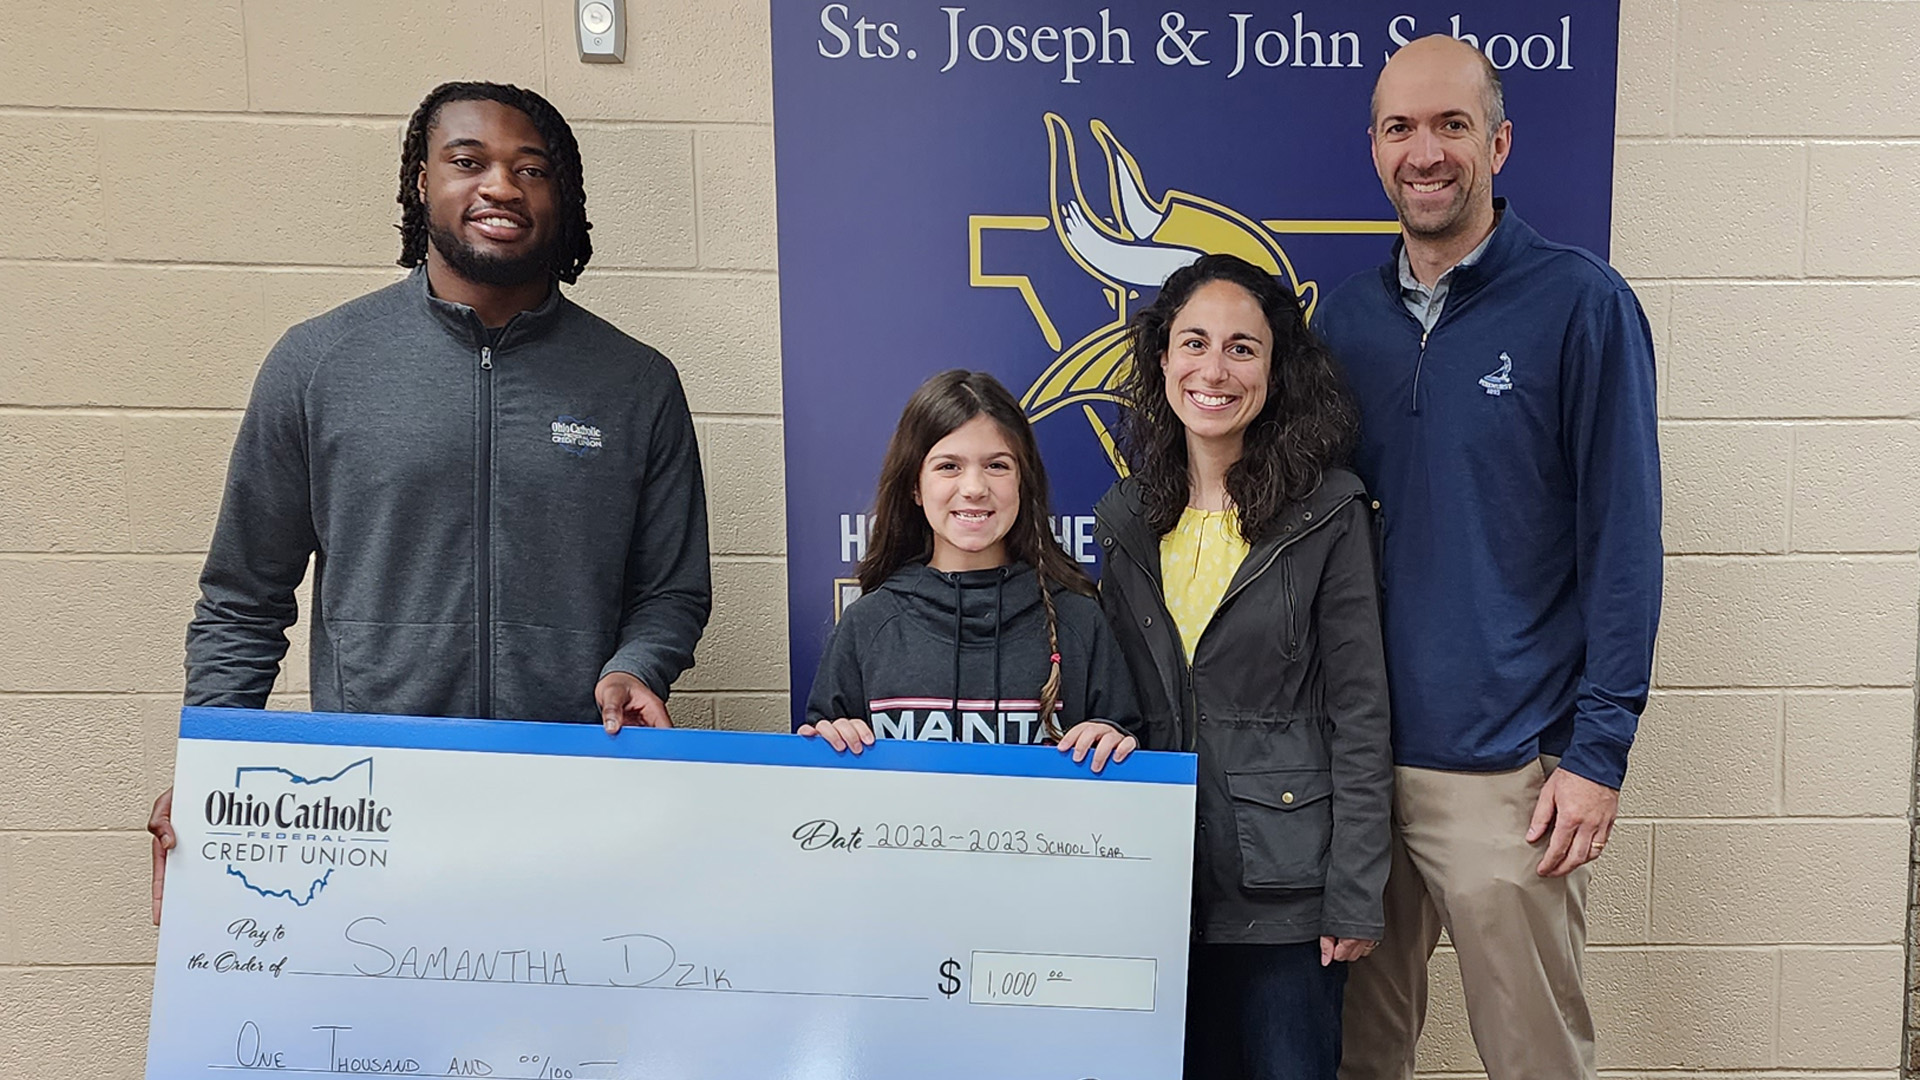 $1000 Scholarship winner Sts. Joseph and John School 2023